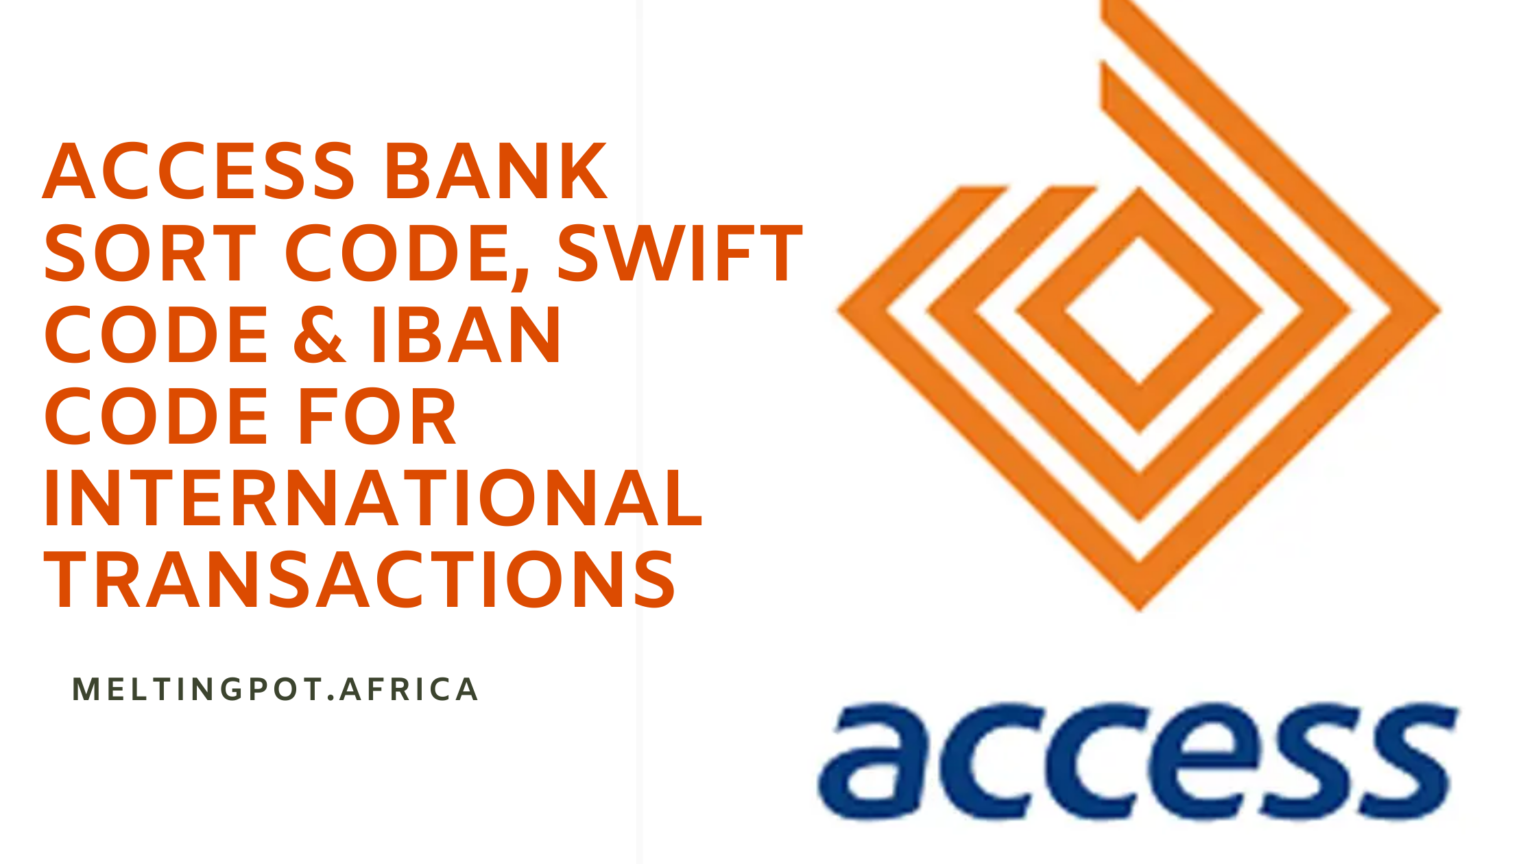 Access Bank Sort code, Swift Code & IBAN Code For International Transactions